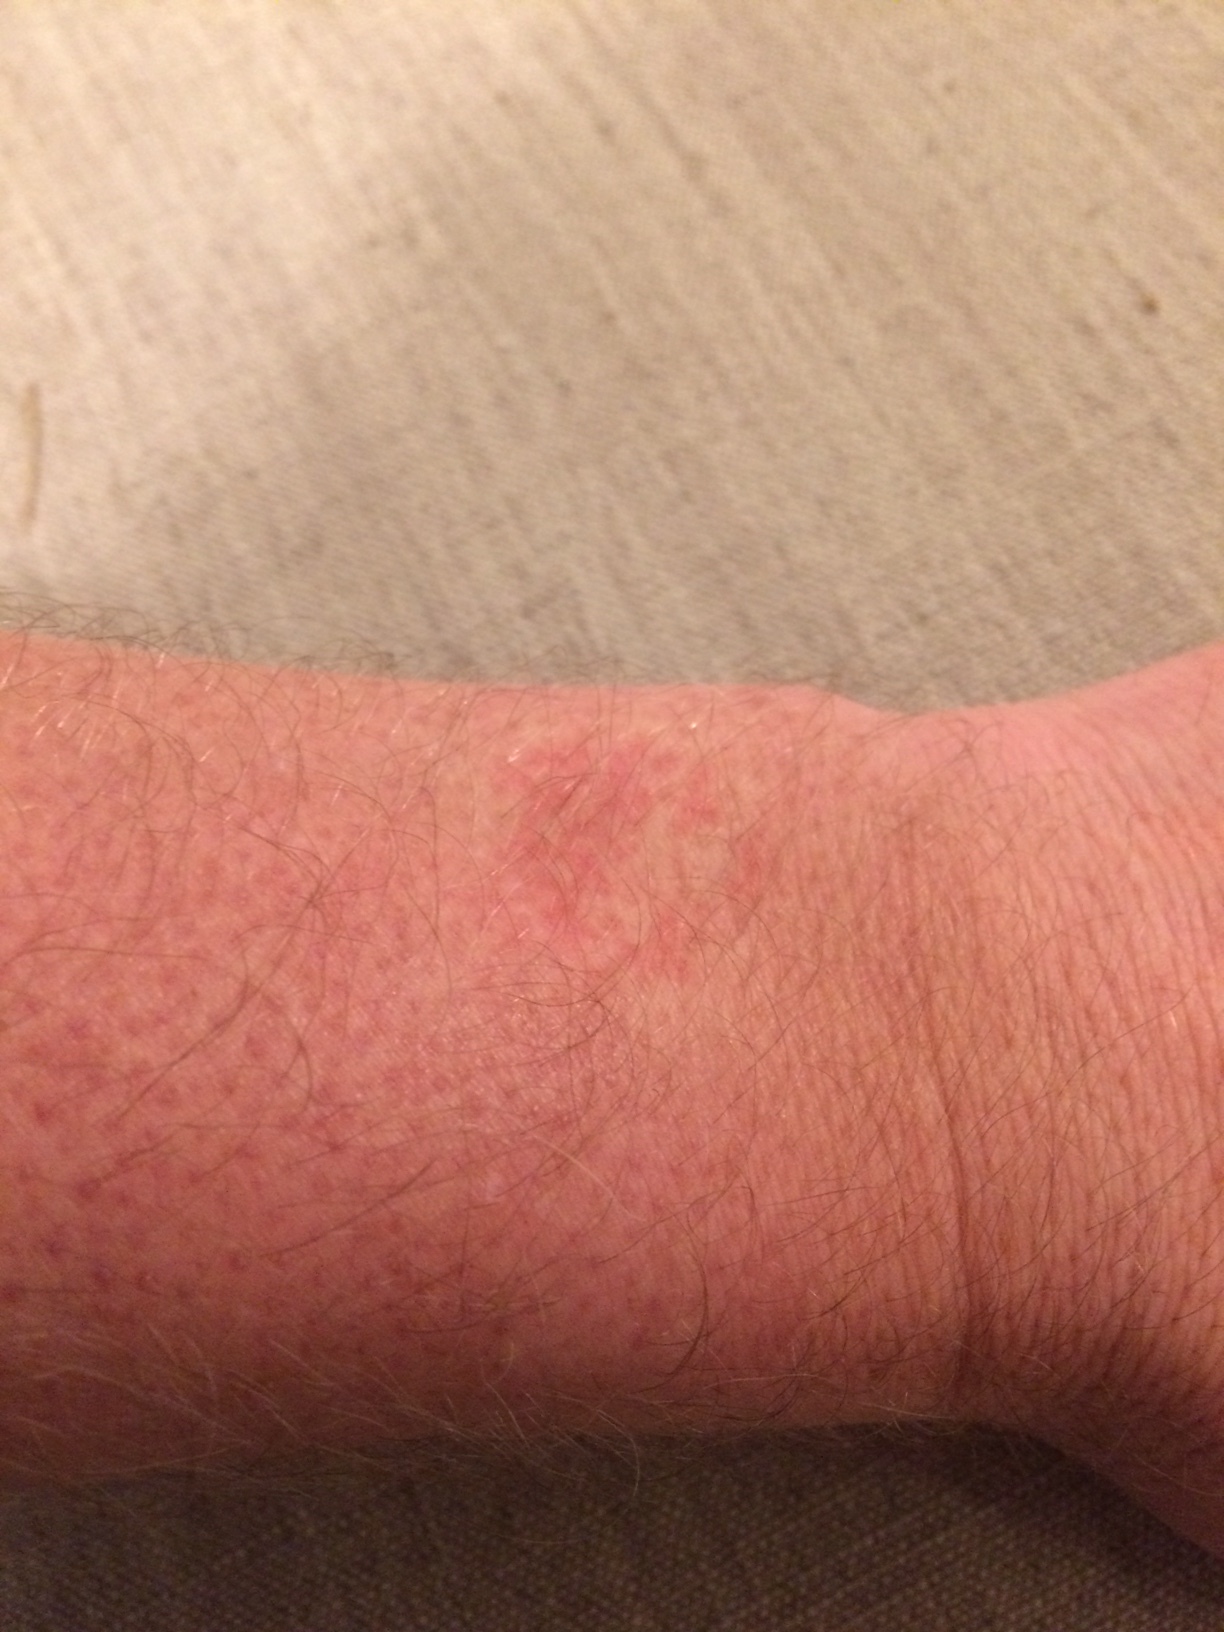 Rash Or Irritation Happening On My Wrist By The Vivoactive 3 Vivoactive 3 Series Health Wellness Garmin Forums